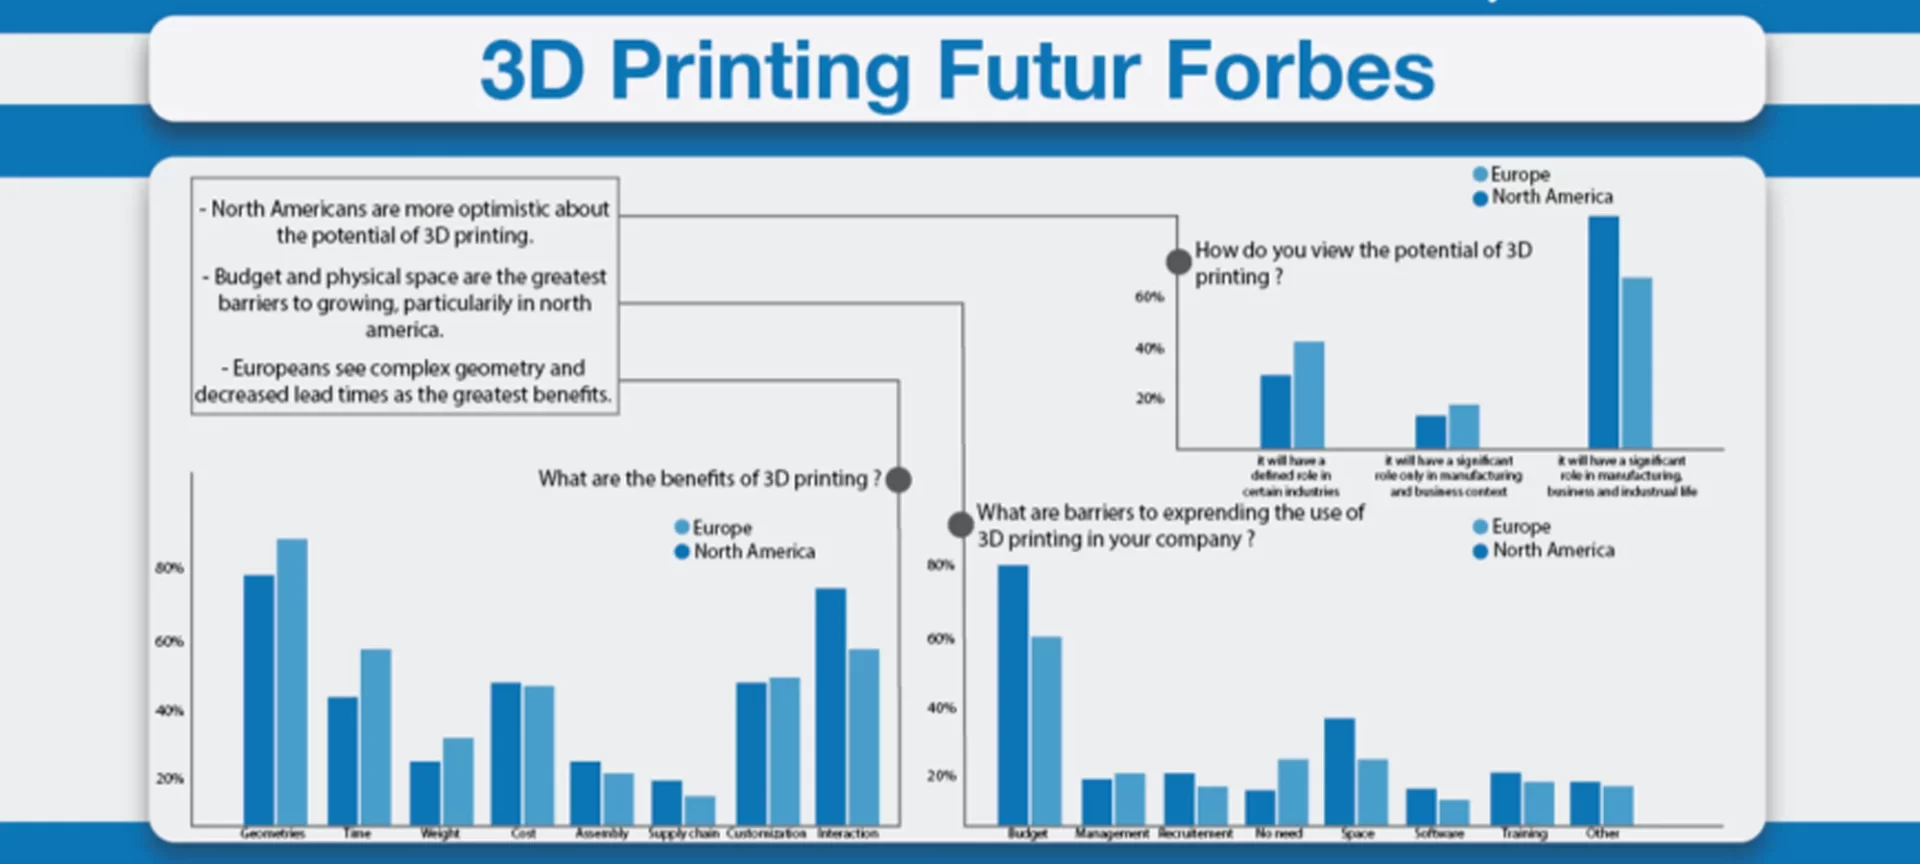 3D printing futur forbs